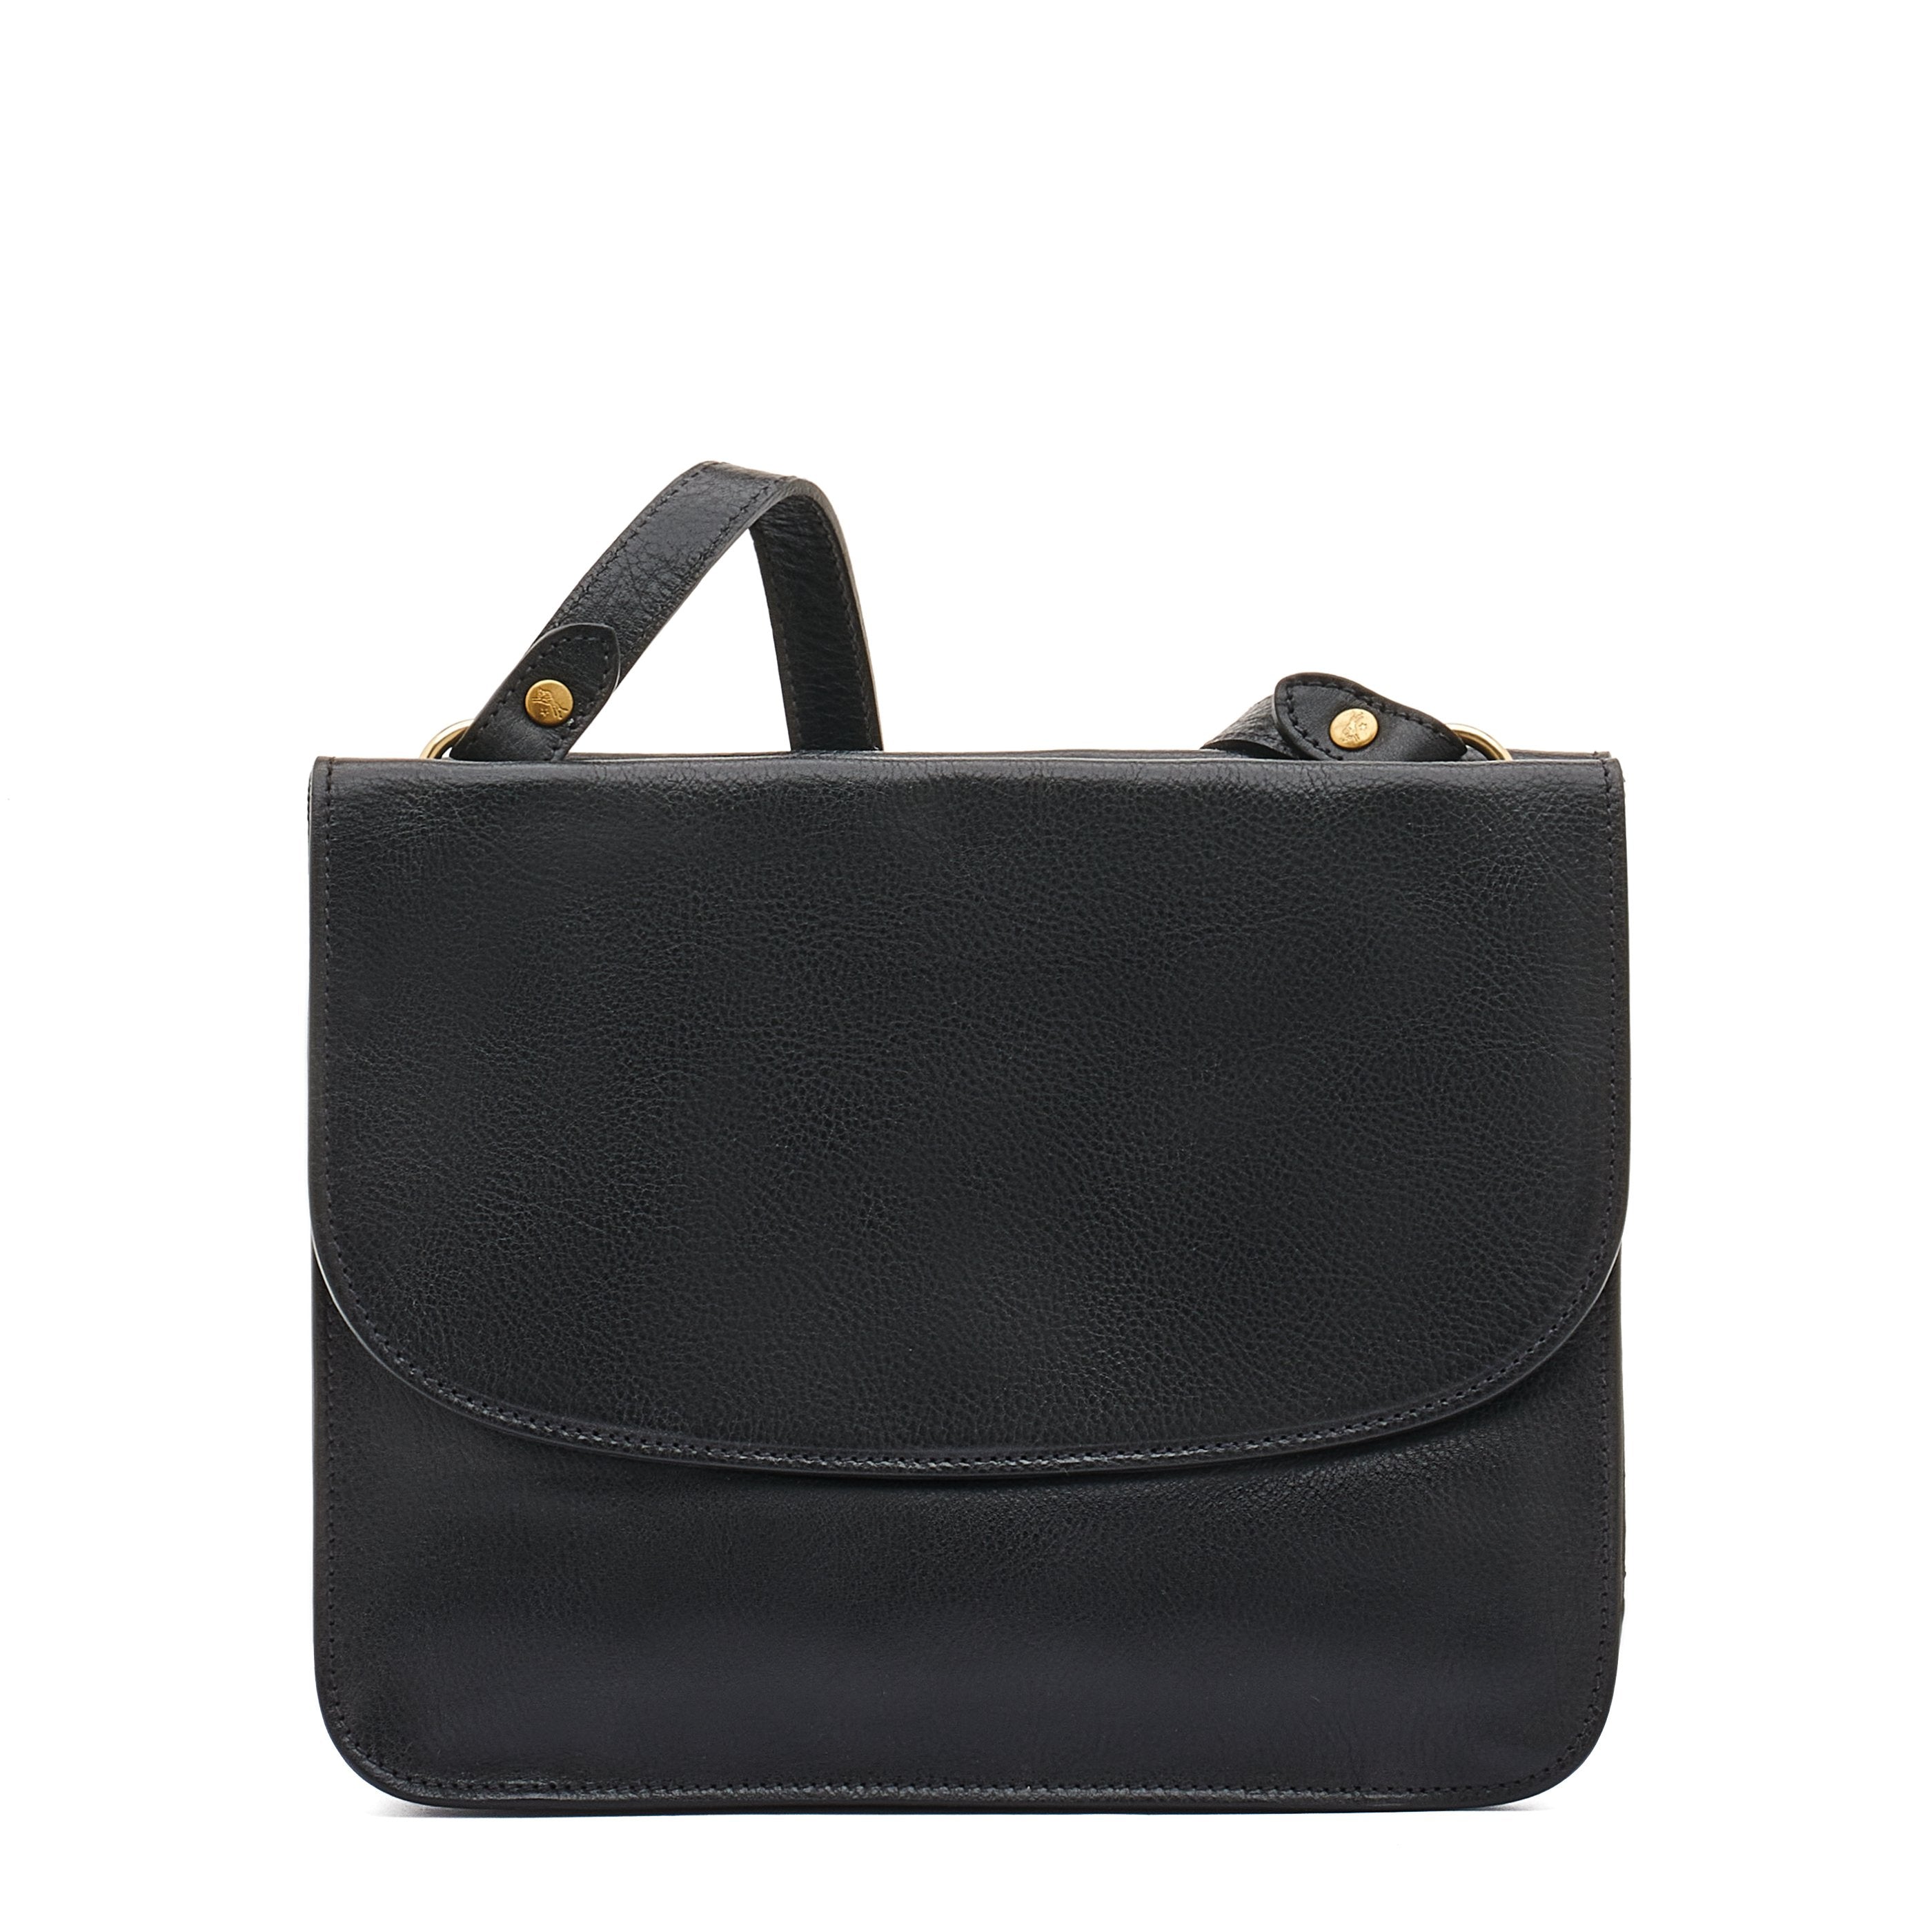 Studio | Women's Crossbody Bag in Leather color Black